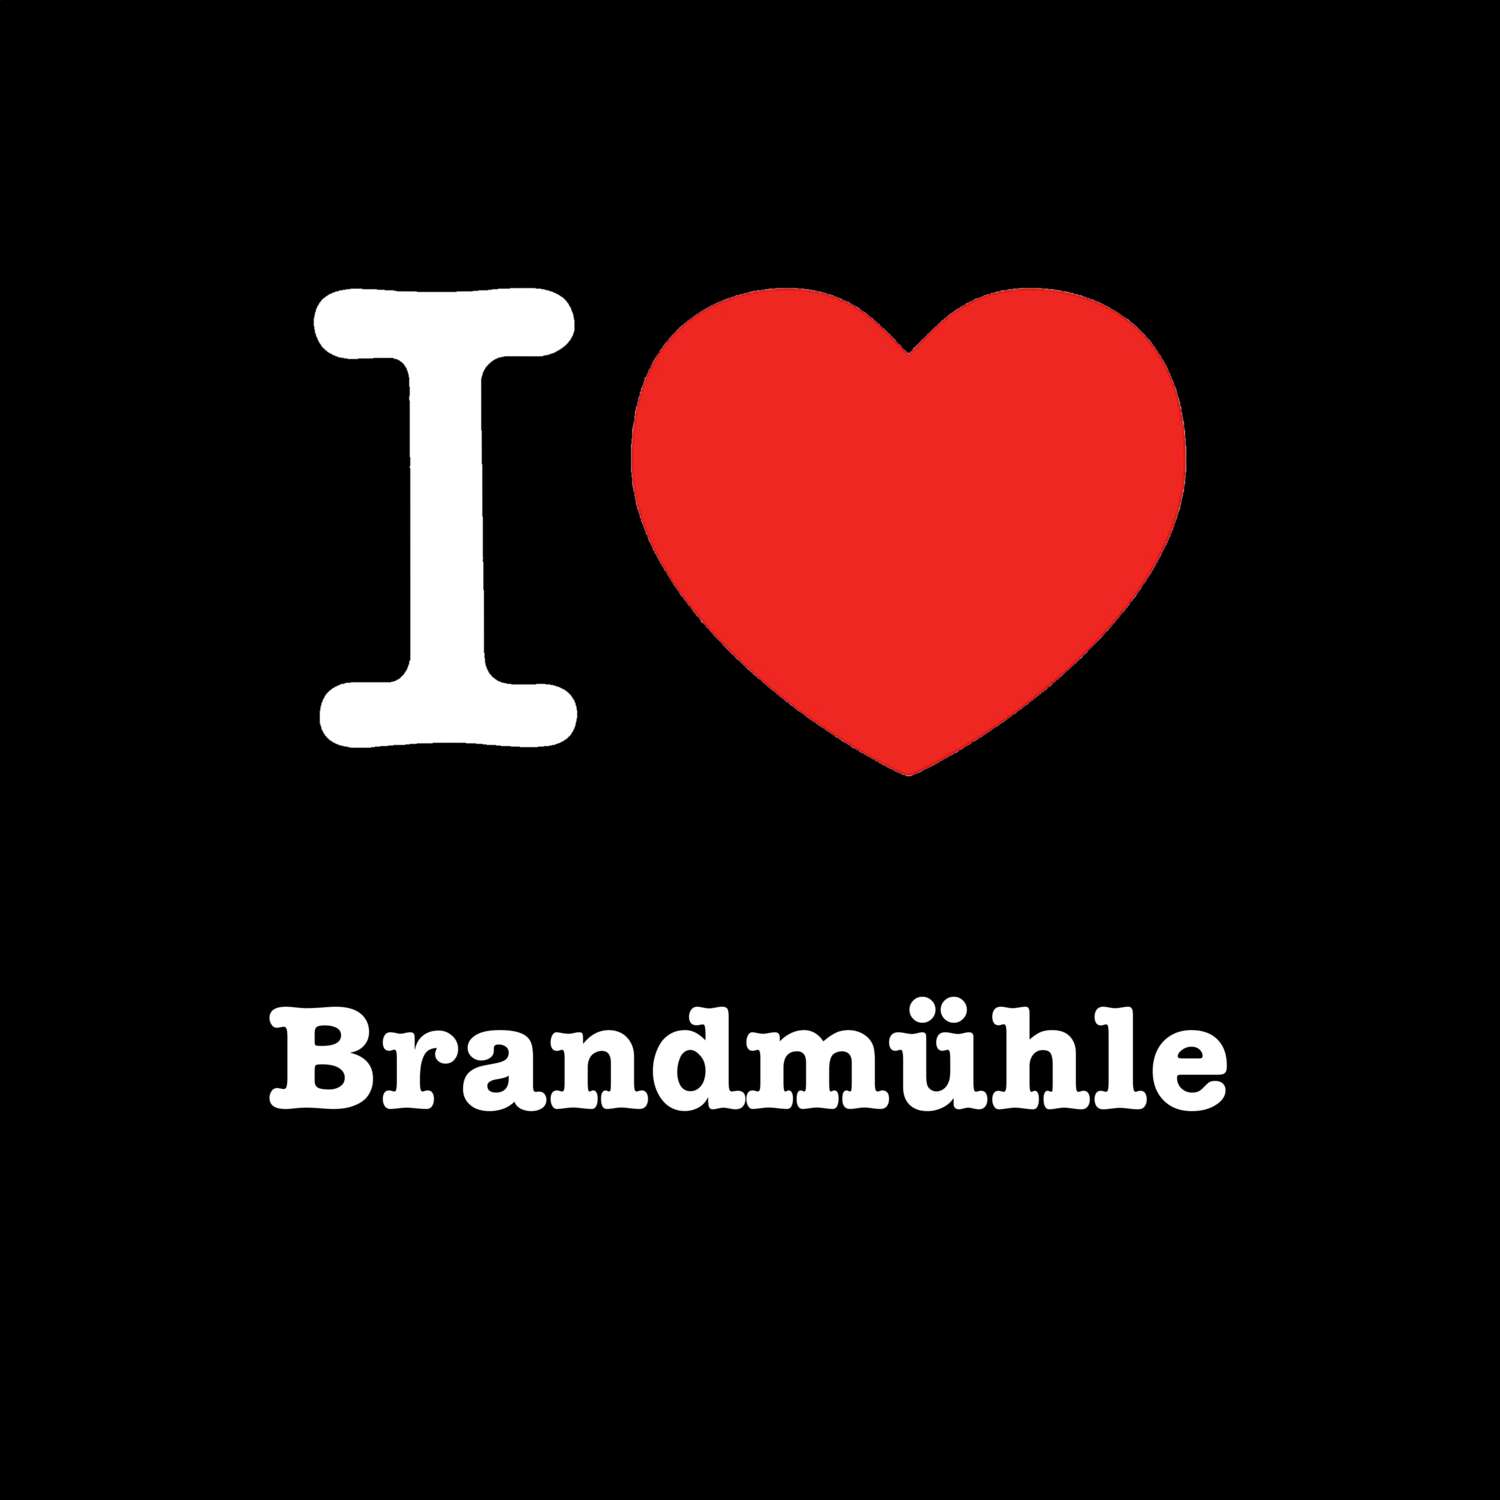 Brandmühle T-Shirt »I love«